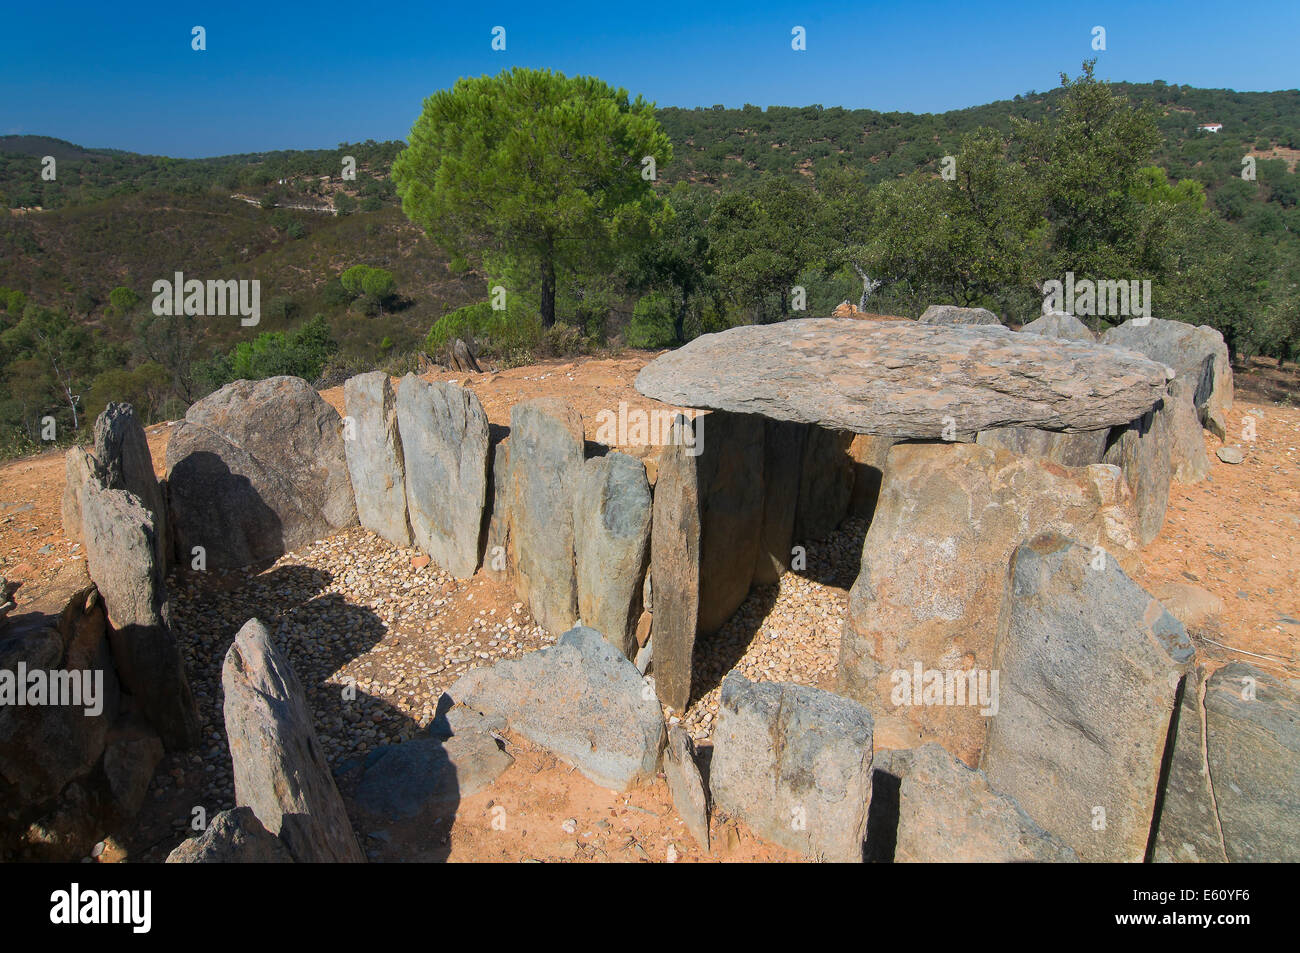 Dolmens of El Pozuelo - betwen 2500-2200 BC, Zalamea La Real. Huelva province, Region of Andalusia, Spain, Europe Stock Photo